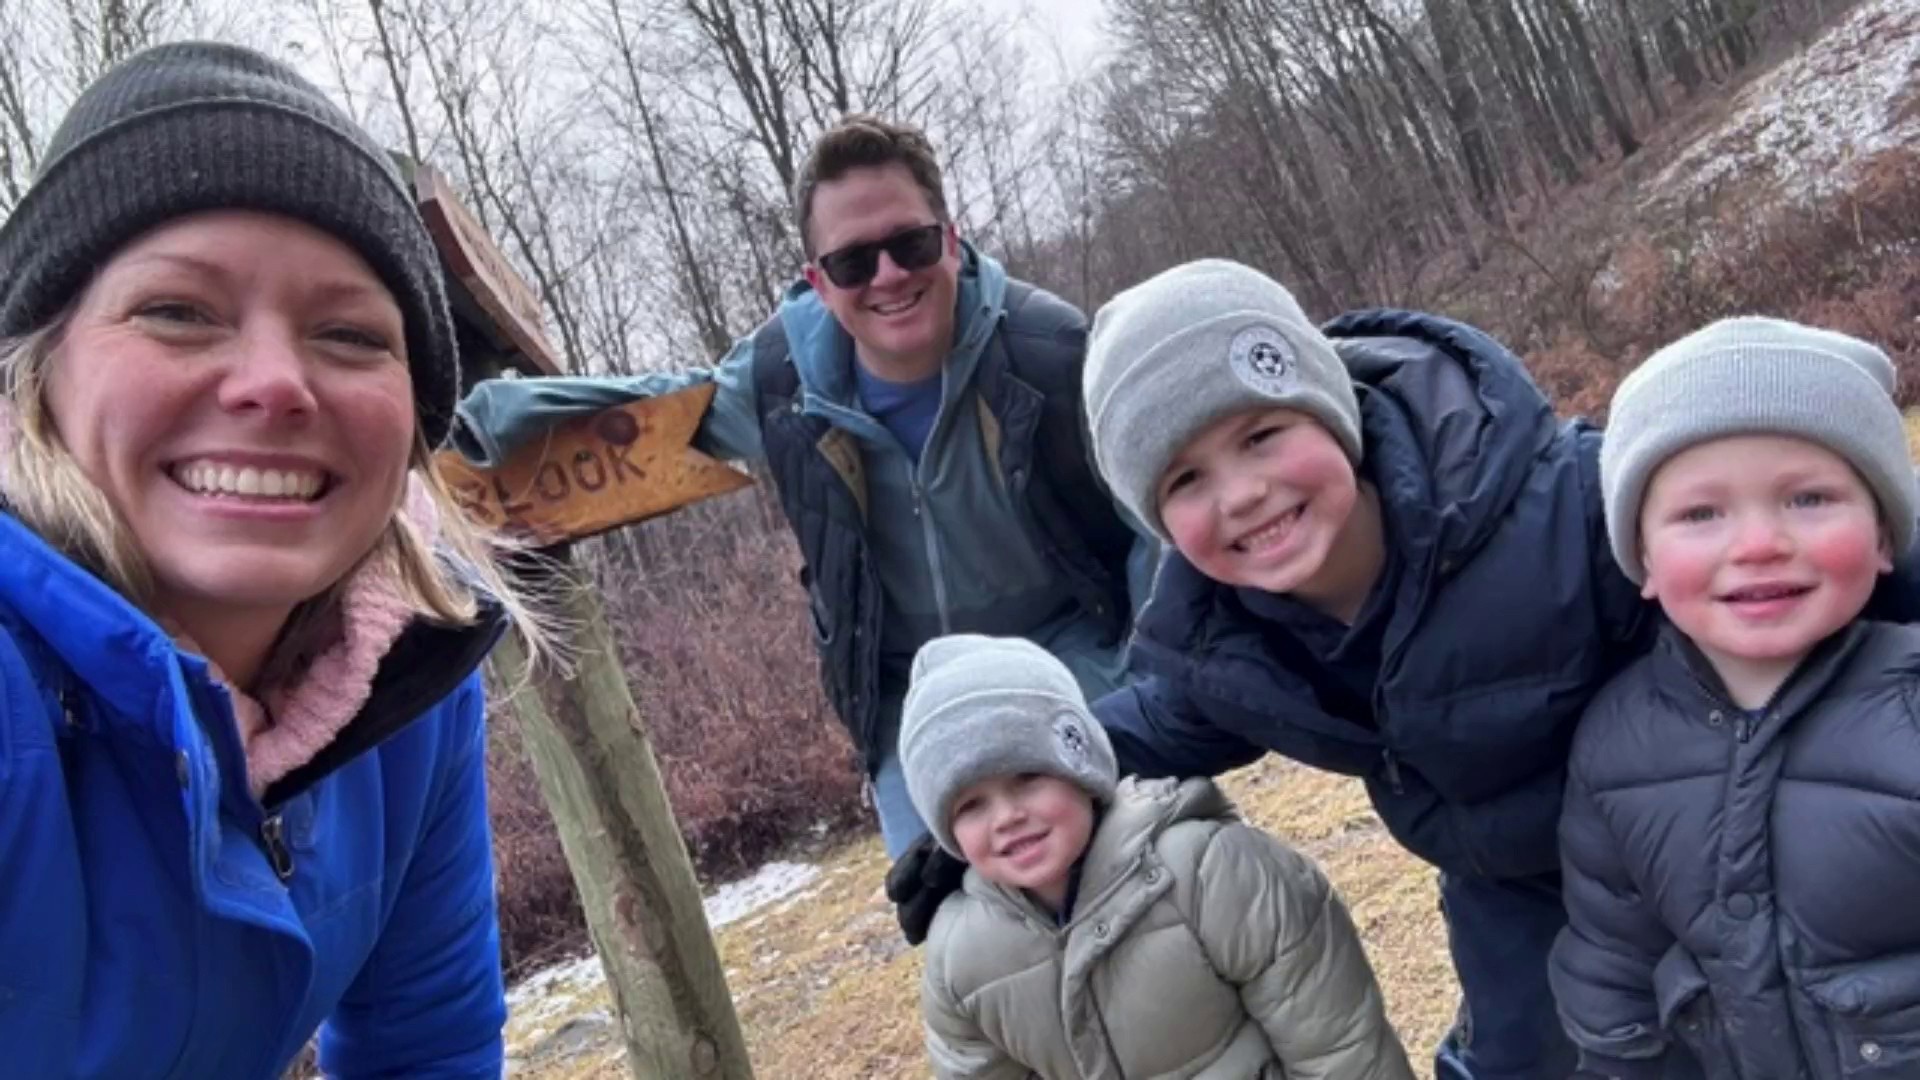 Dylan Dreyer on taking all 3 kids on first family ski trip